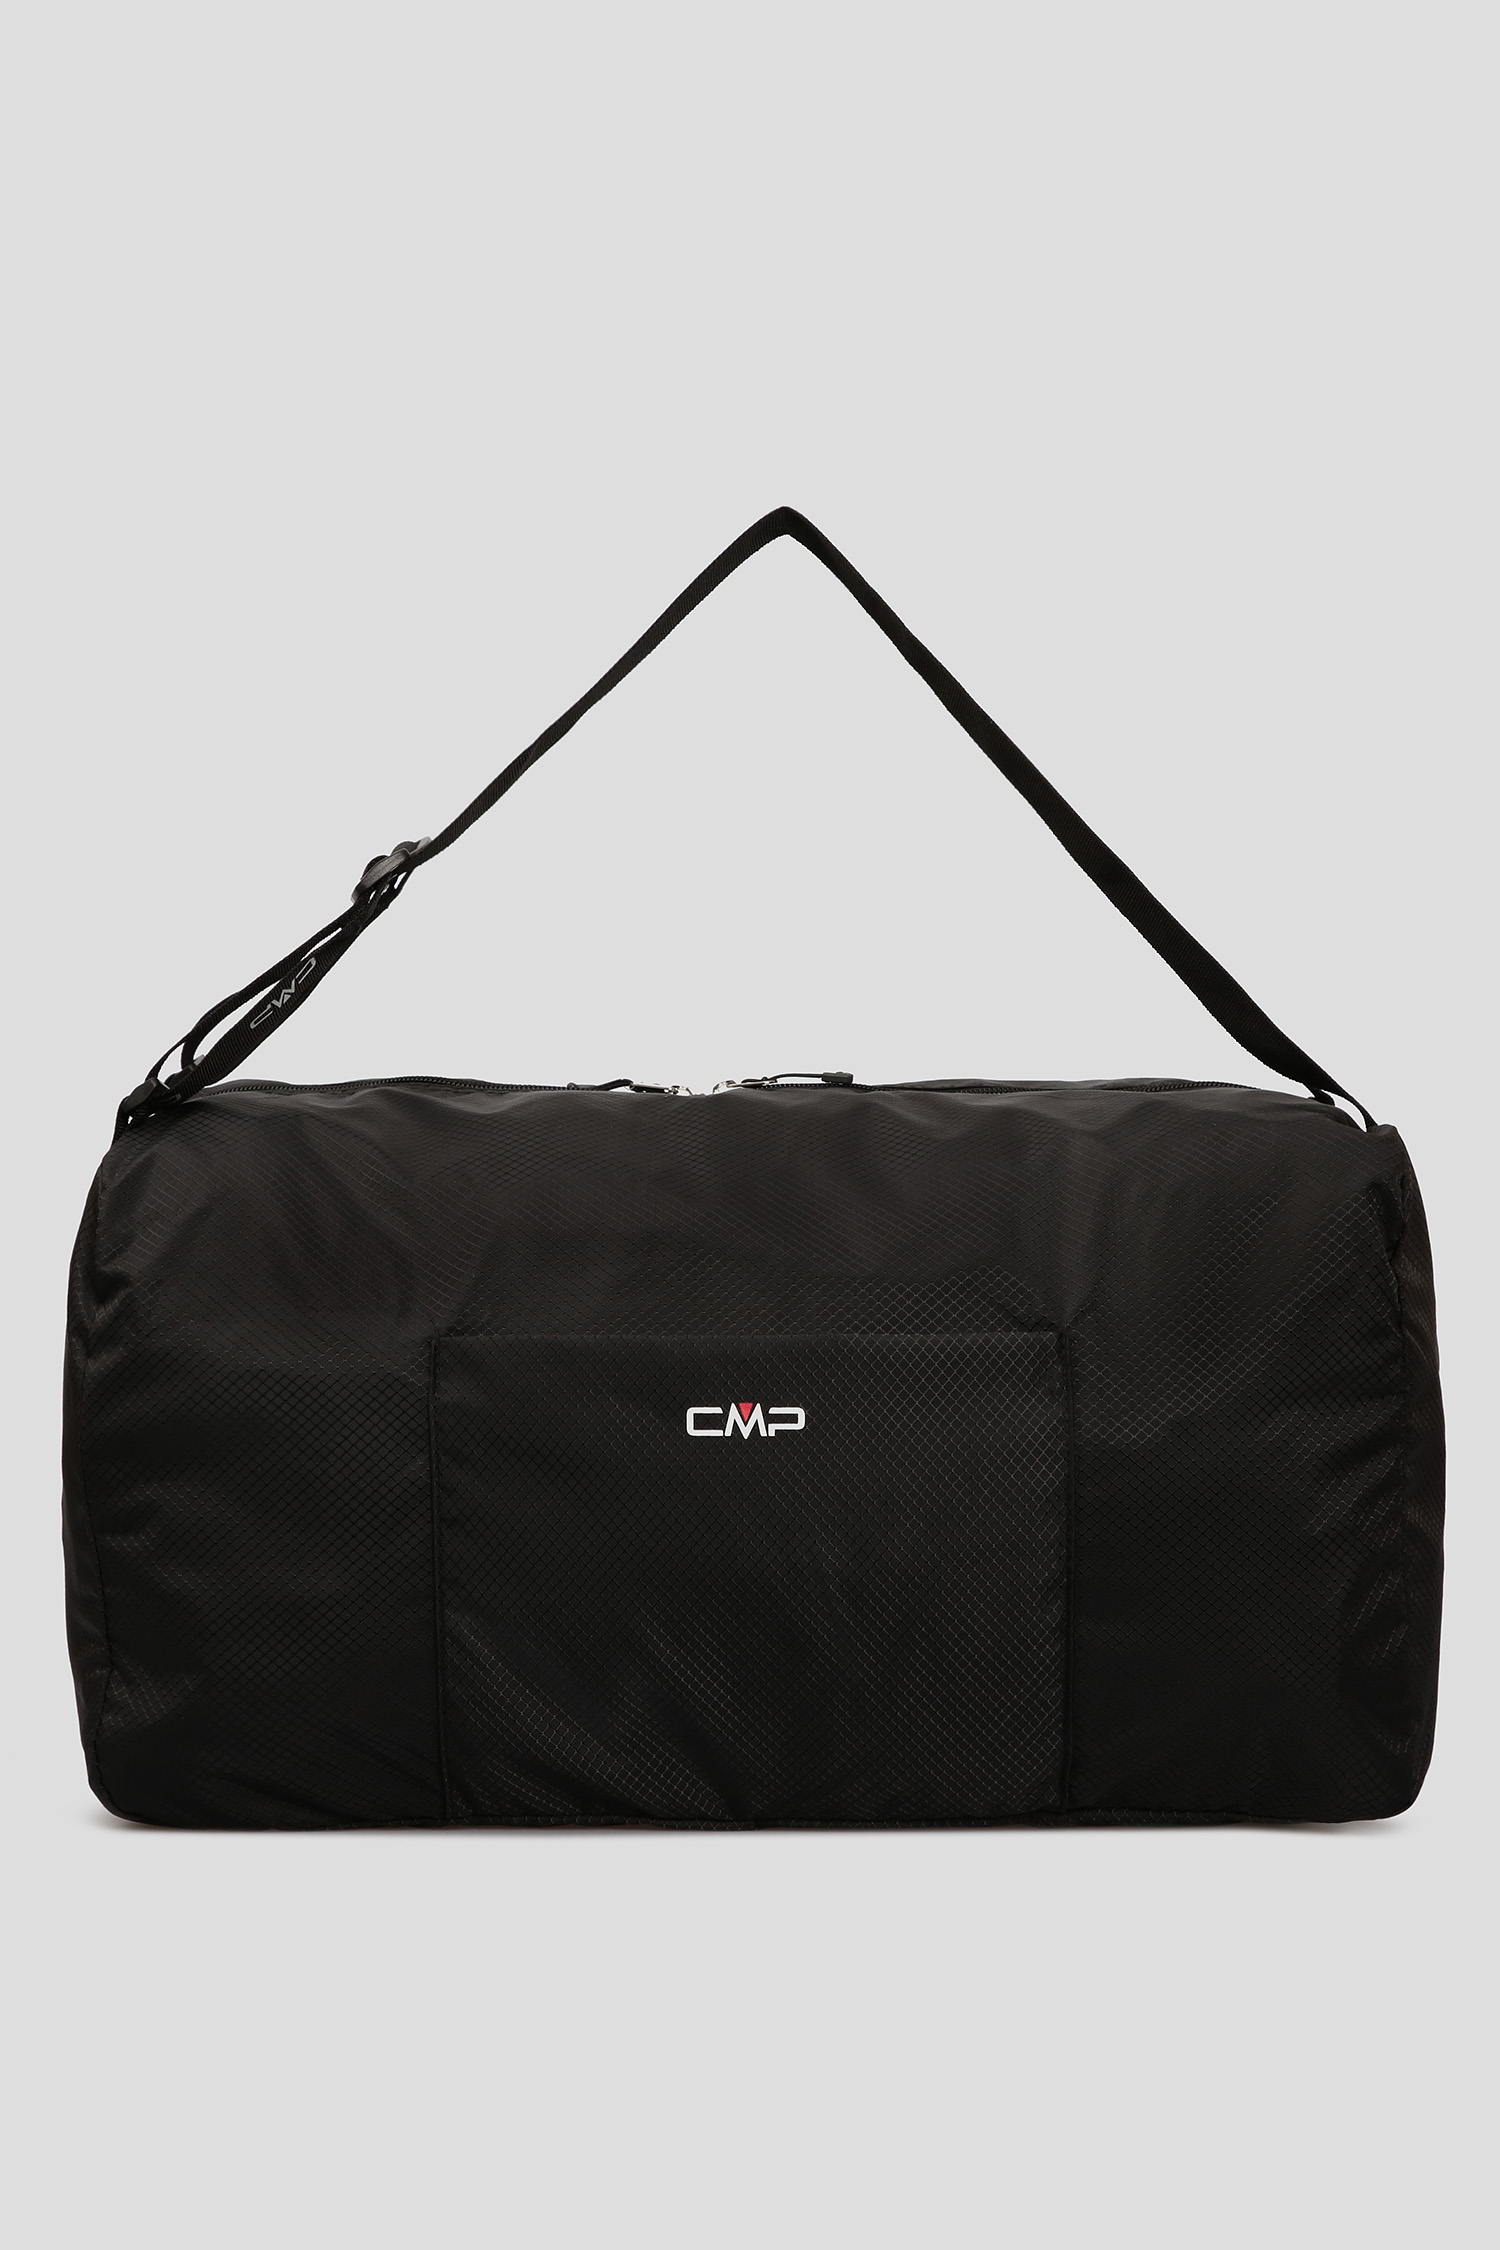 Черная спортивная сумка FOLDABLE GYM 1